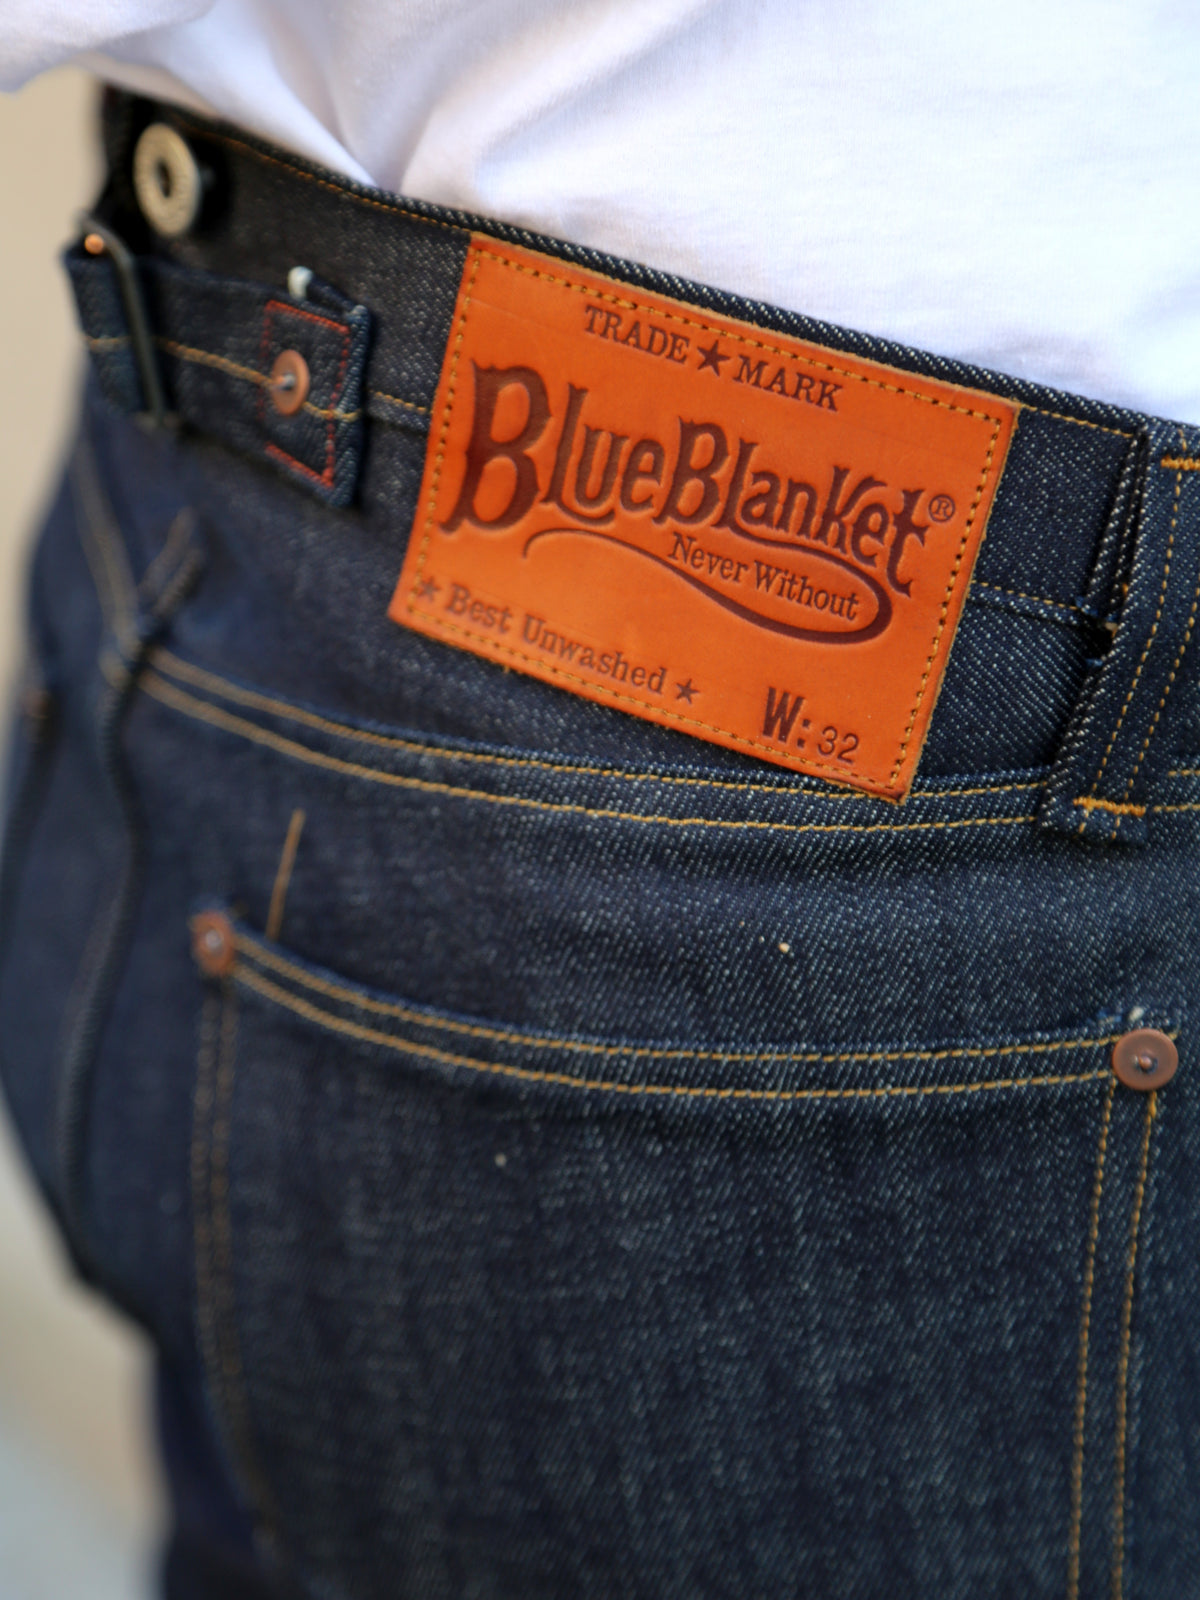 Blue Blanket Denim Pants Single Needle (P35 JP14)